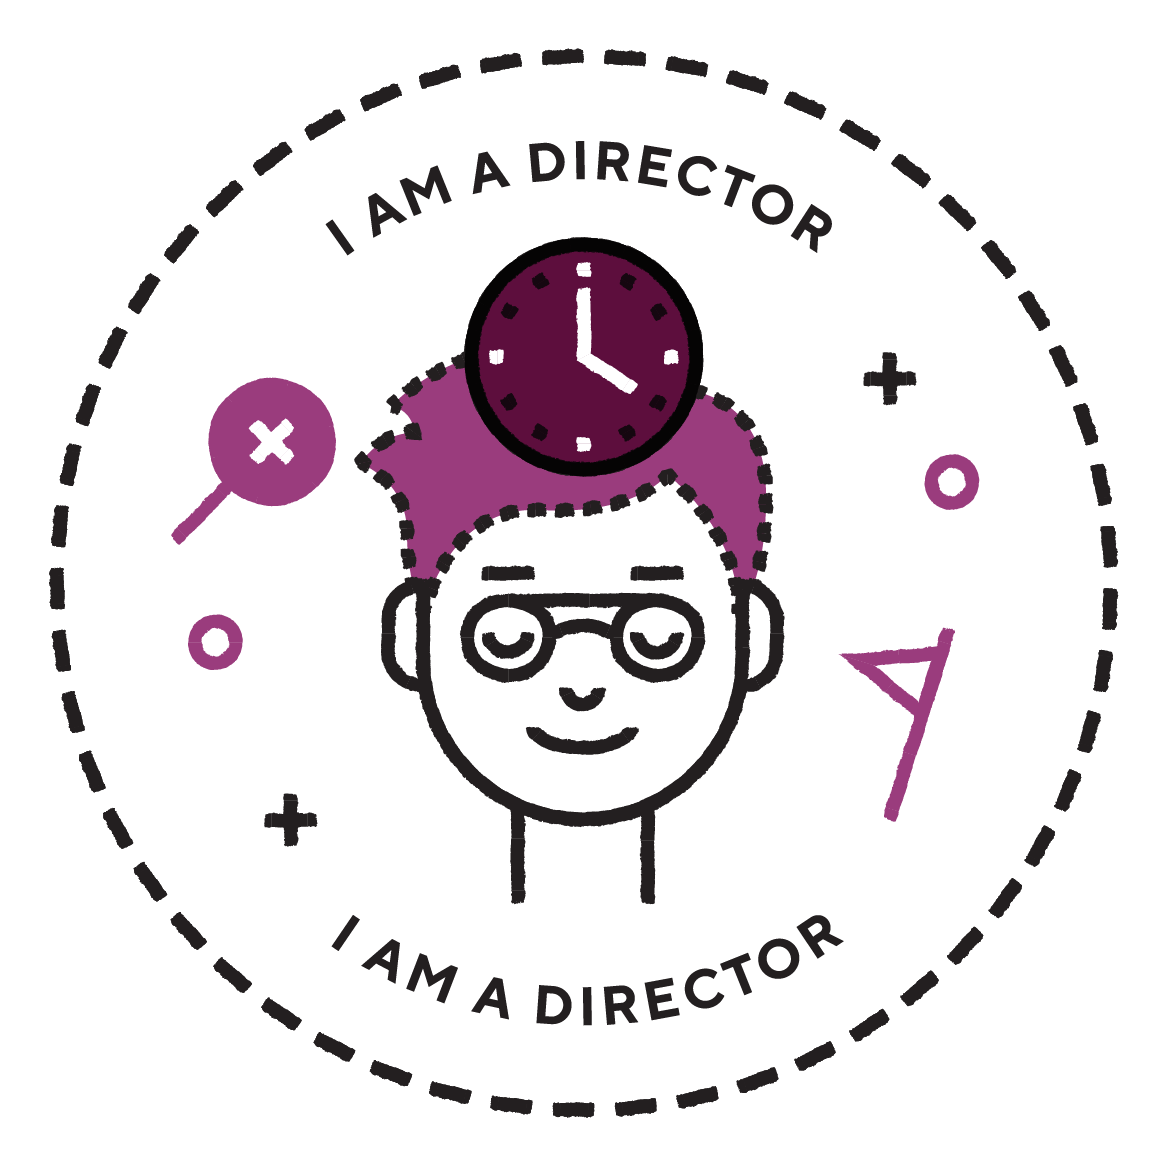 Hendri - Director (Self-employed)